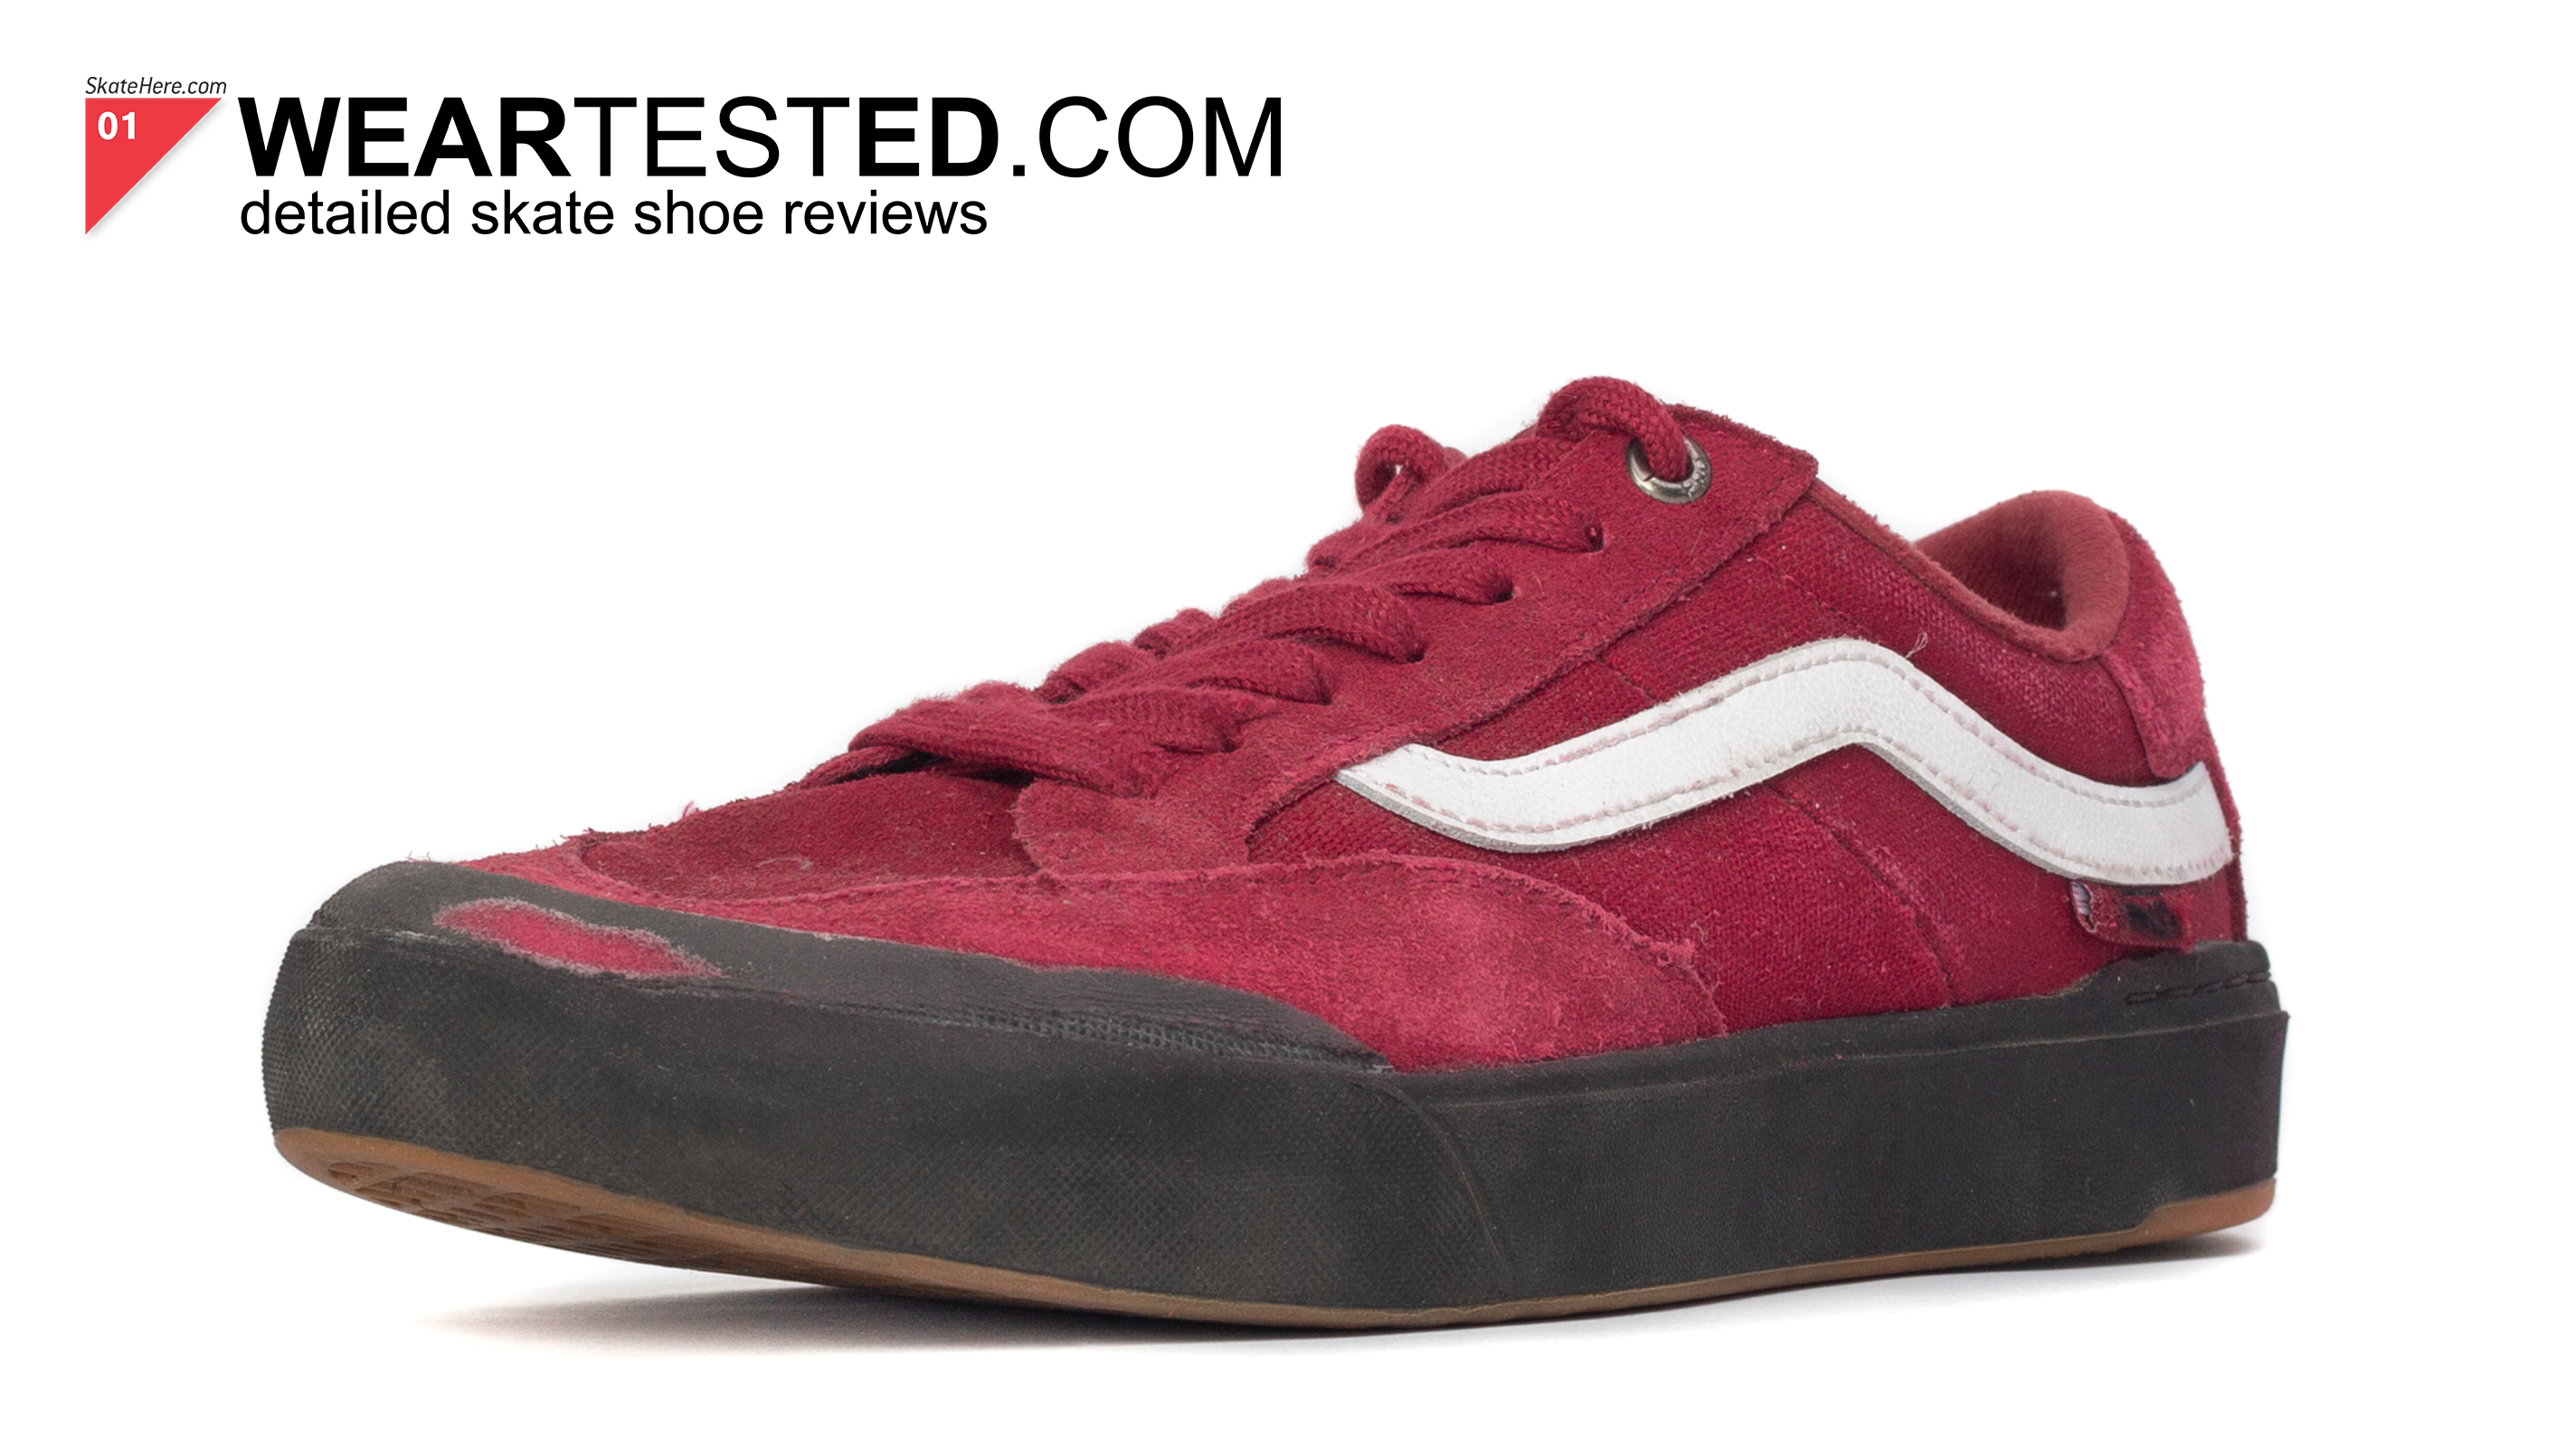 Vans Berle Pro - Weartested - Detailed Skate Shoe Reviews